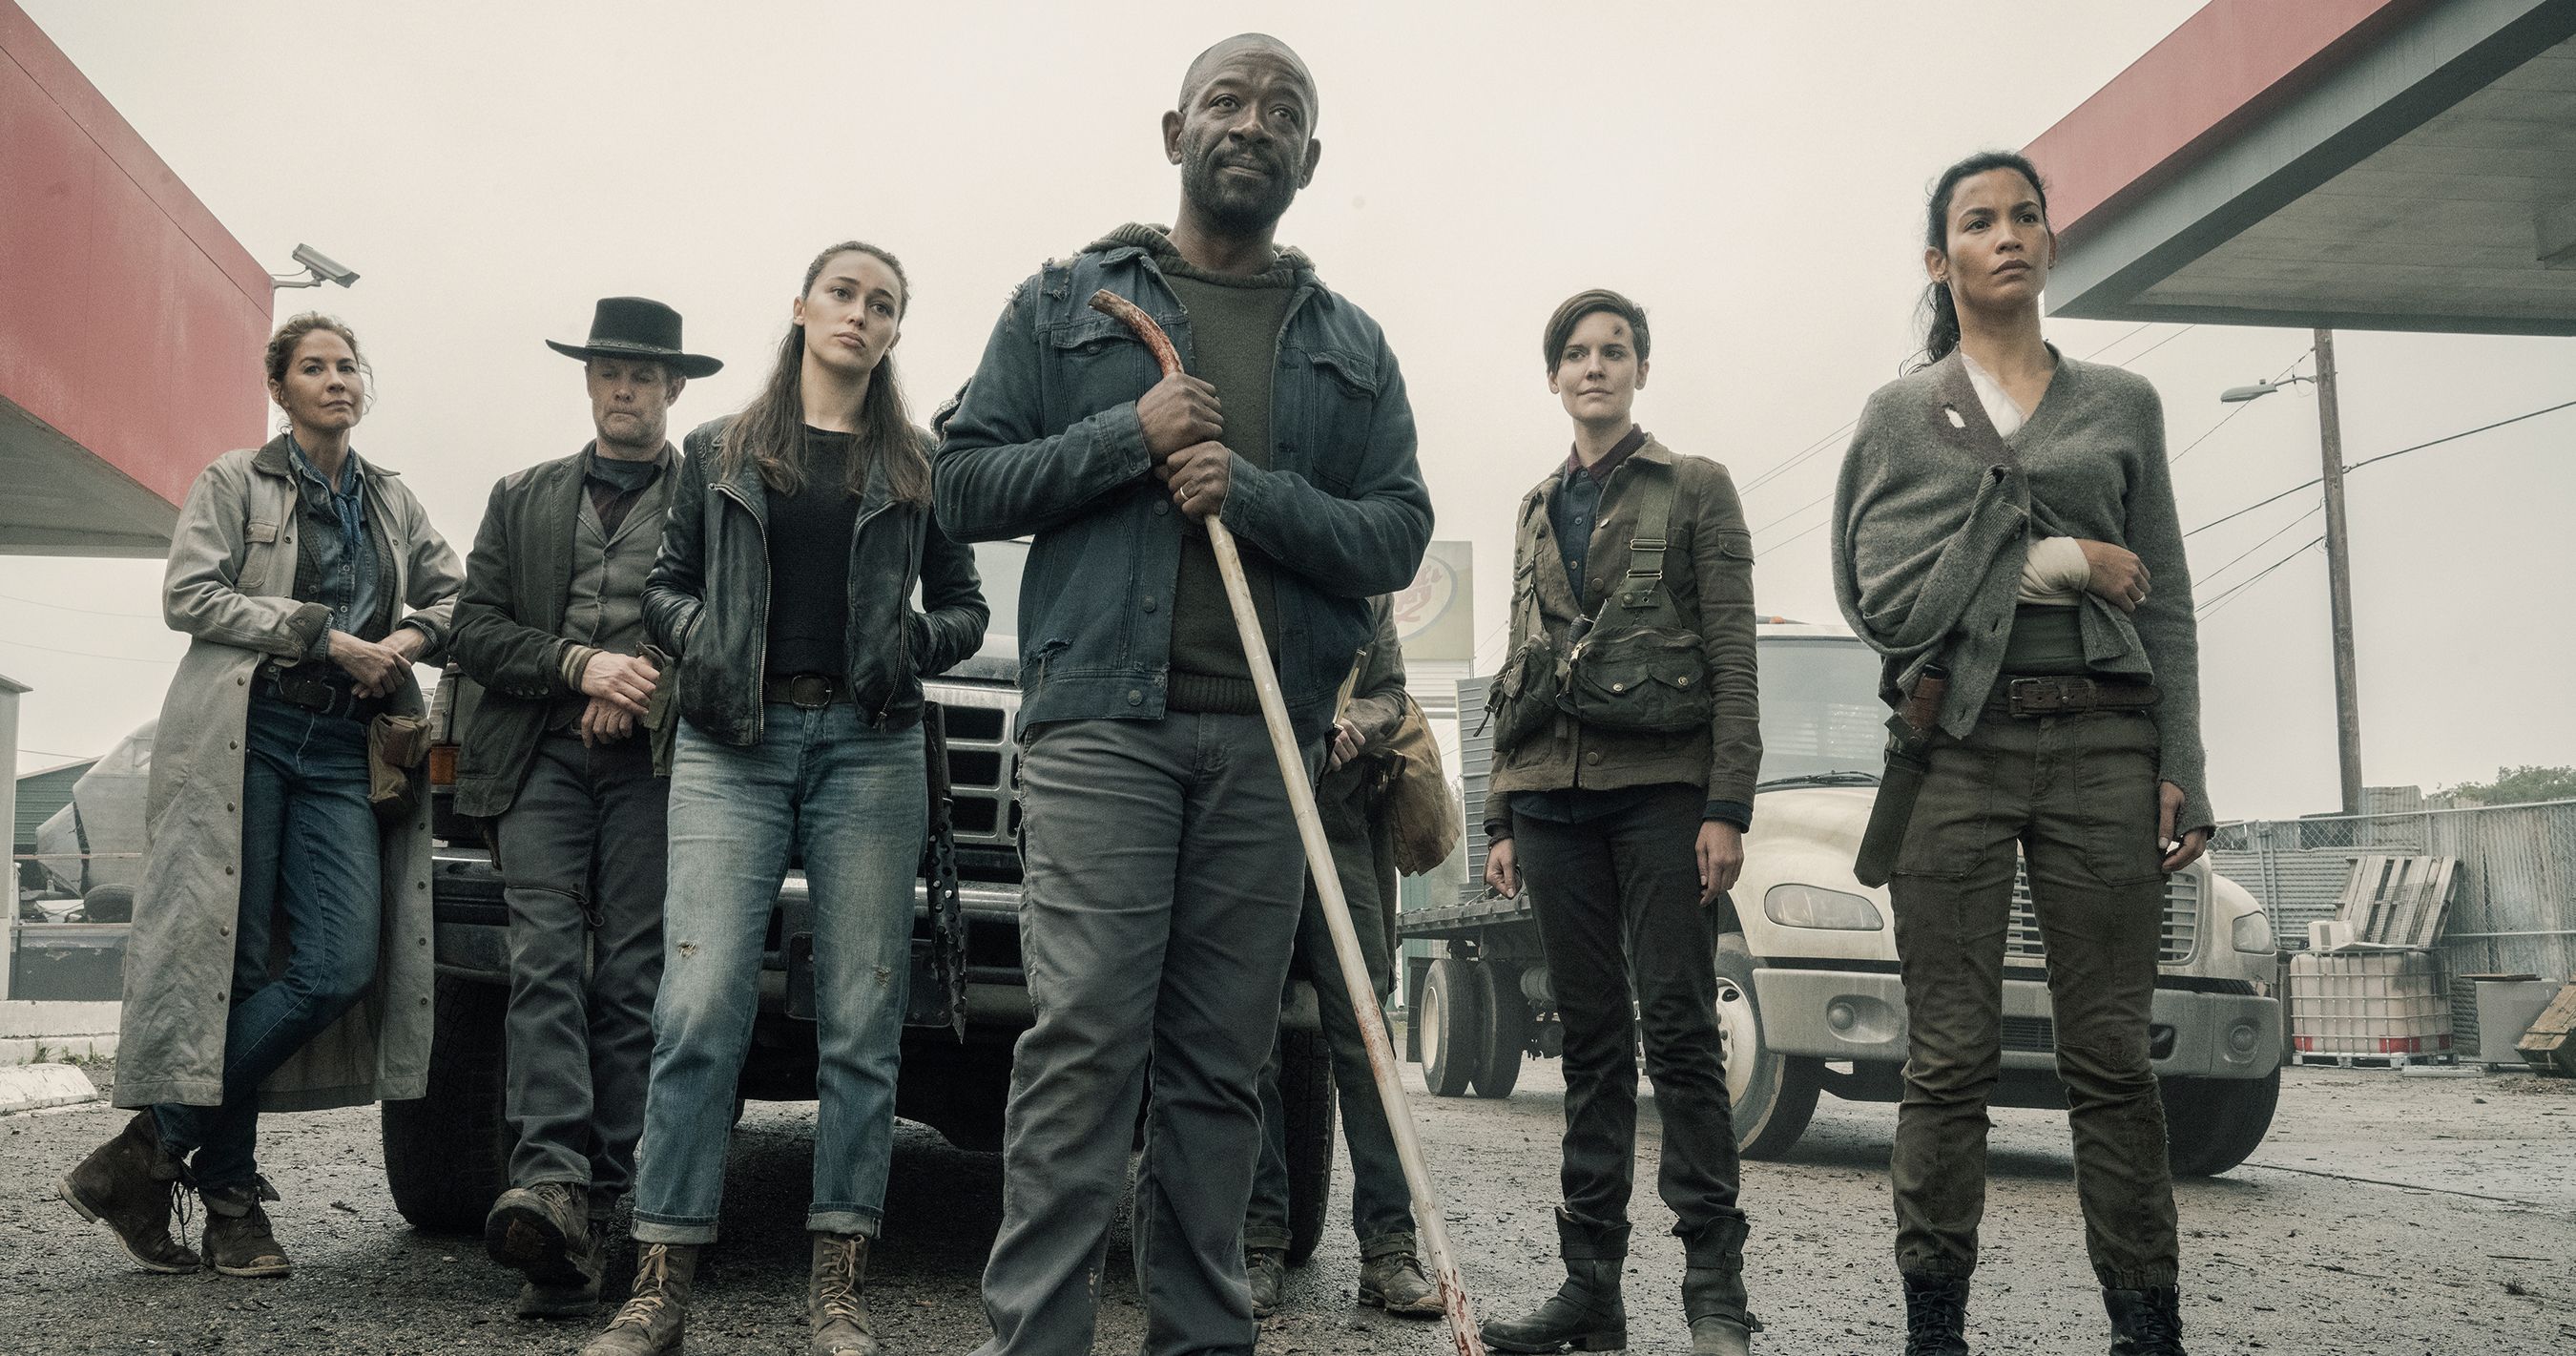 Fear the Walking Dead Episode 5.6 Recap: A Nuclear Dilemma Arises